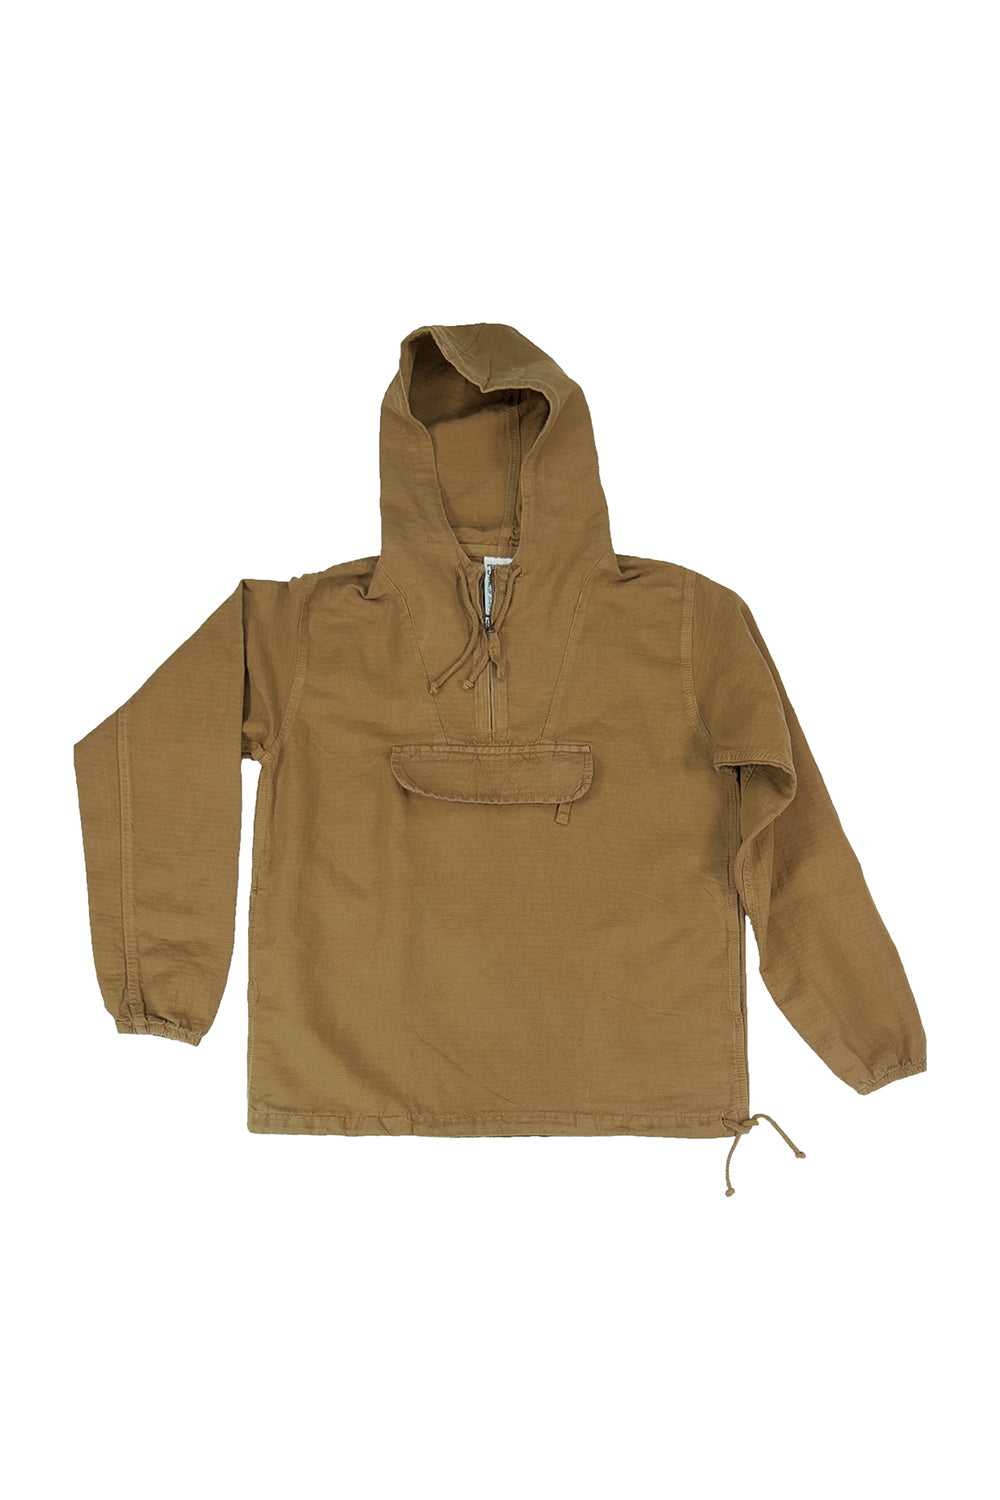 Shoreline Anorak Jacket | Jungmaven Hemp Clothing & Accessories / Color: Coyote